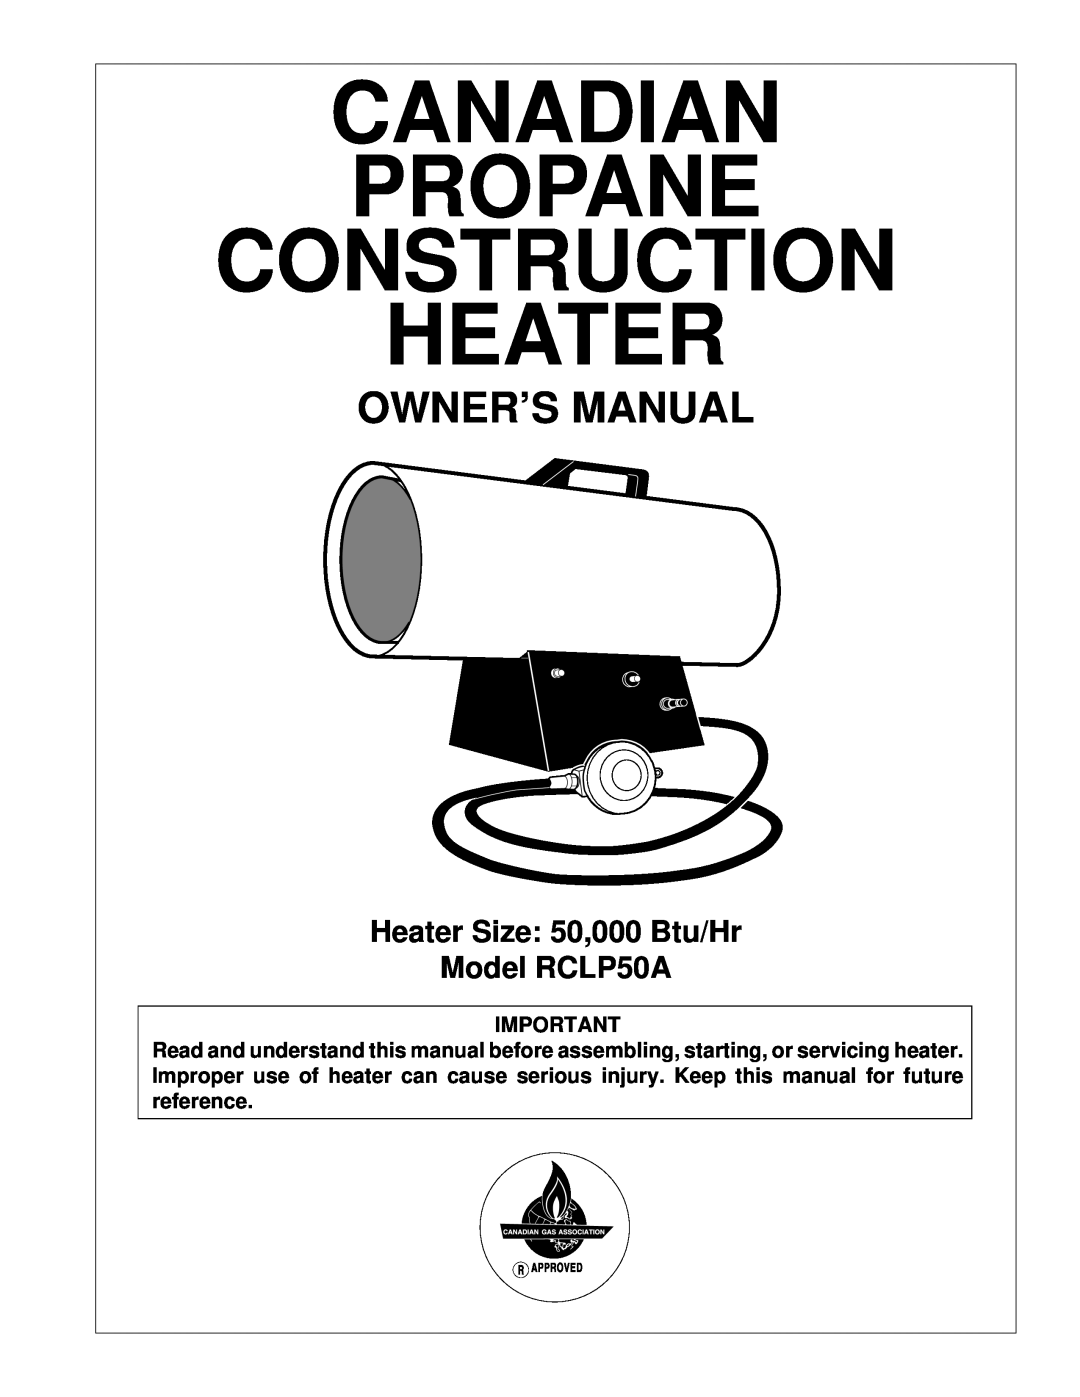 Desa owner manual Canadian Propane Construction Heater, Heater Size 50,000 Btu/Hr Model RCLP50A 